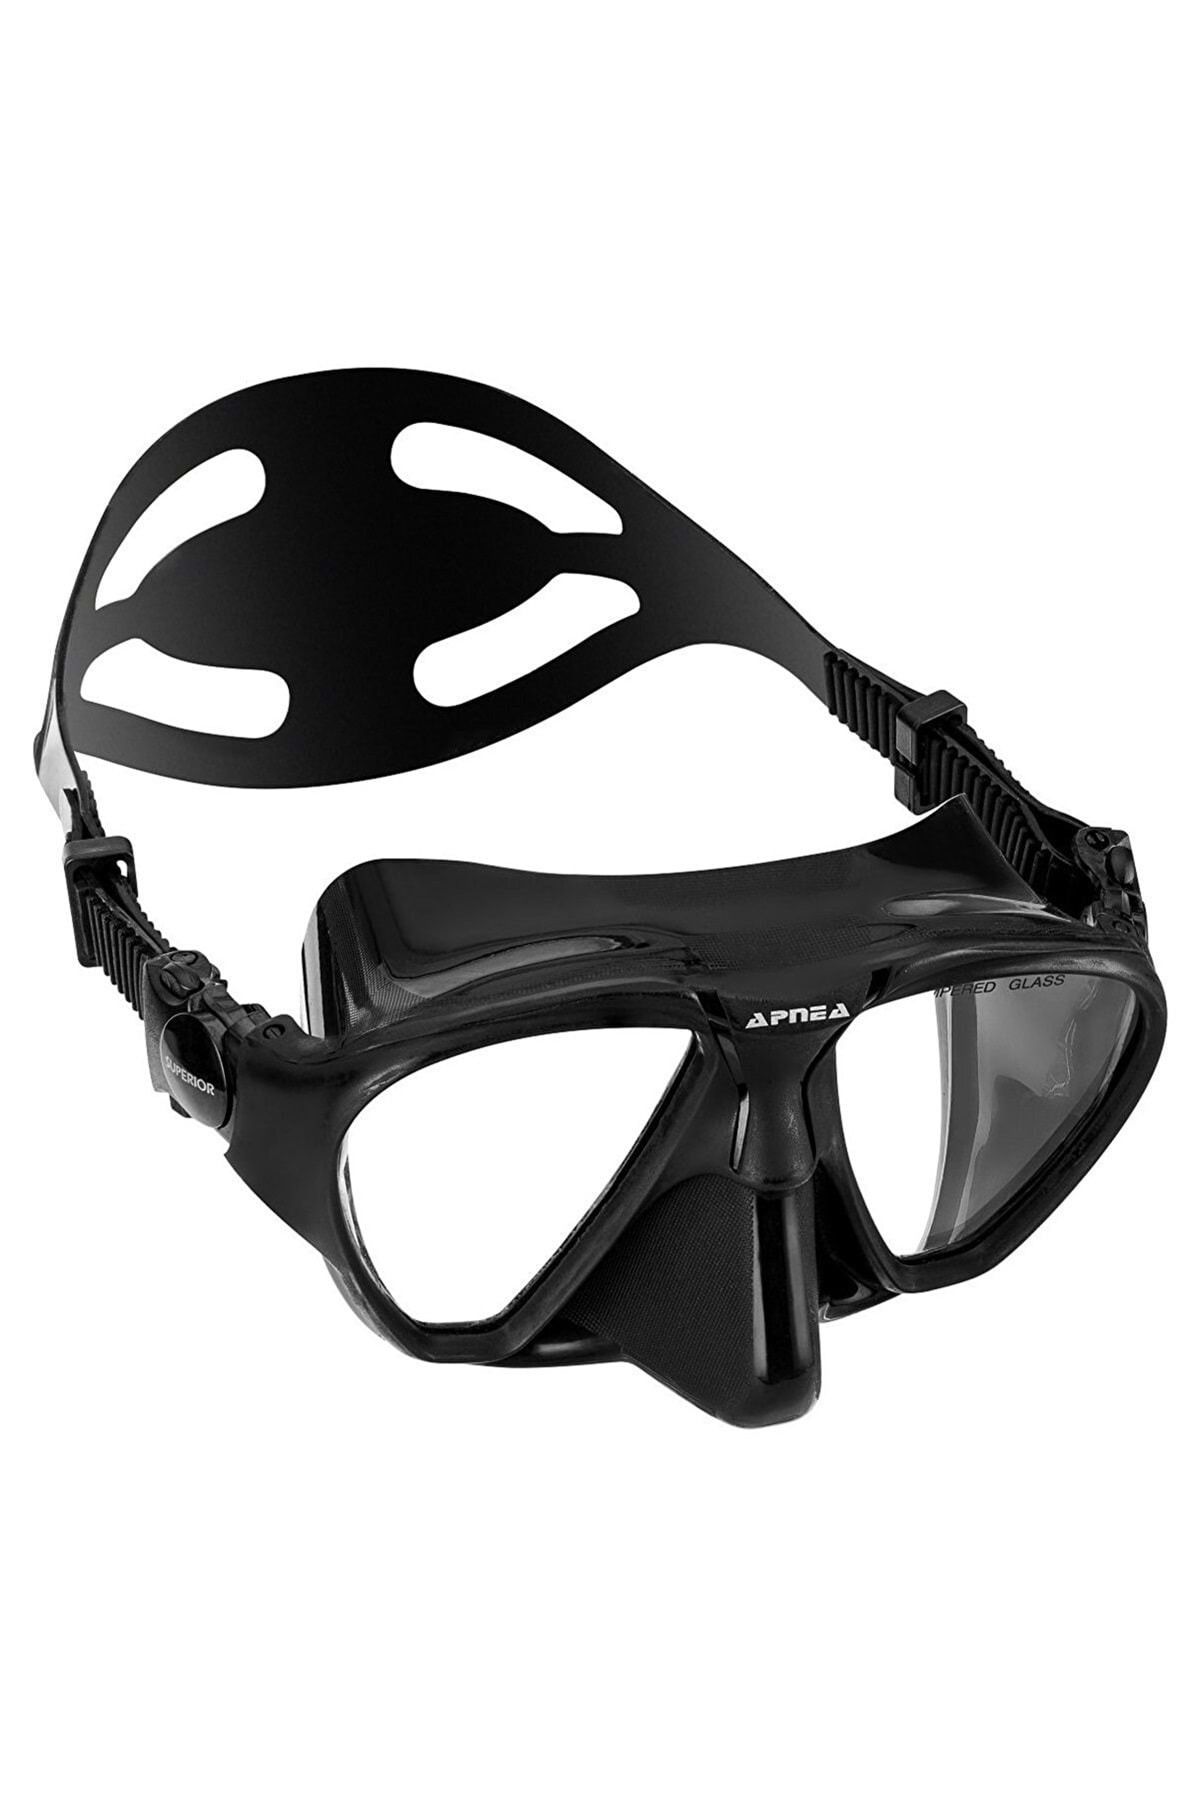 Apnea Maske Superıor Black P-734 --- --- 1ad.